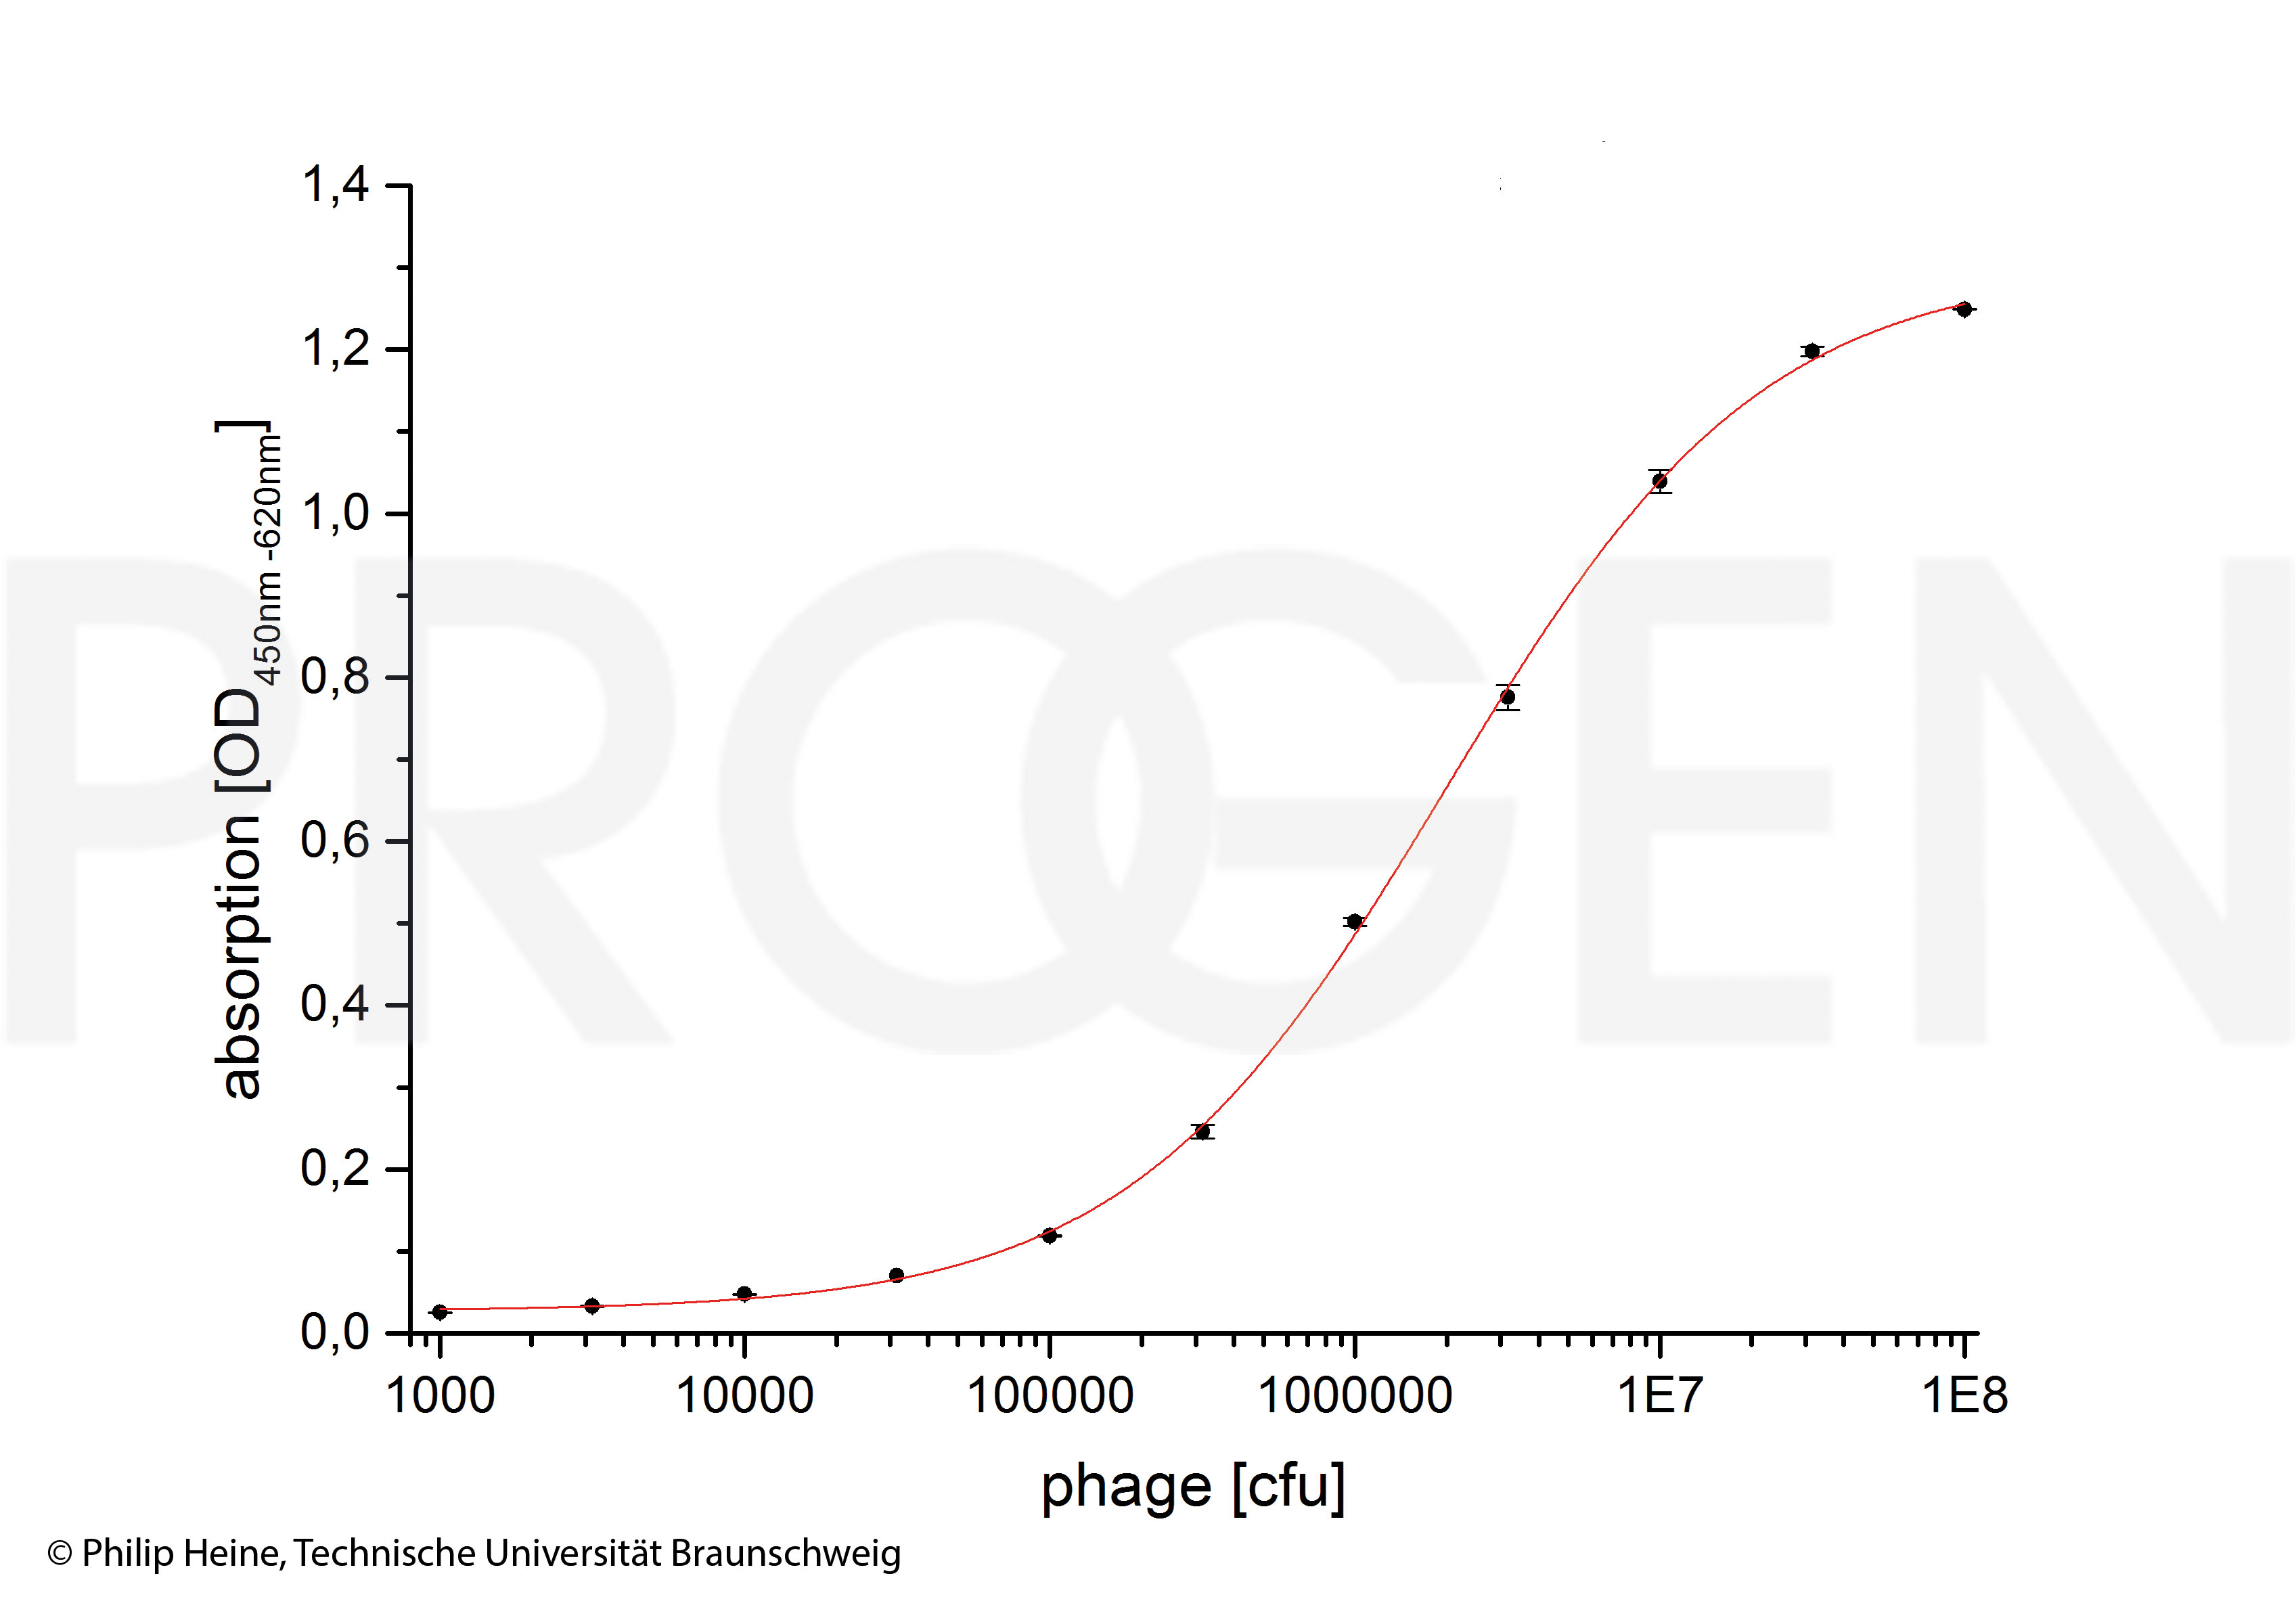 anti-M13/fd/F1 Filamentous Phages mouse monoclonal, B62-FE2, HRP Conjugate, sample 